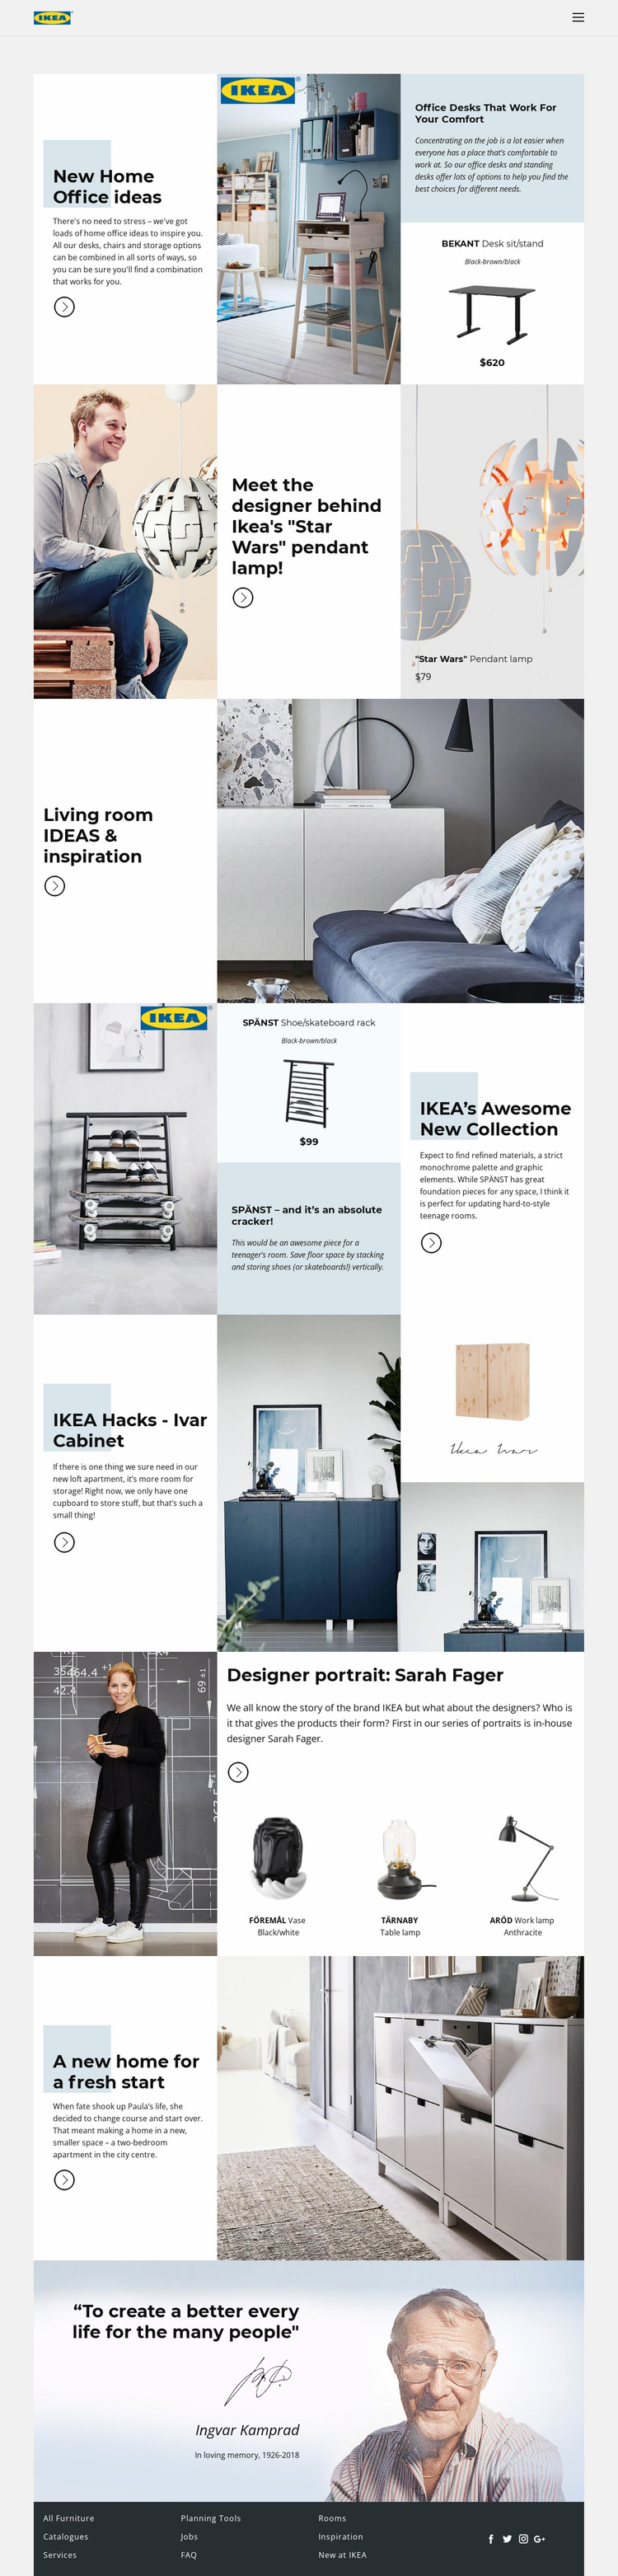 Inspiration from IKEA Website Builder Templates